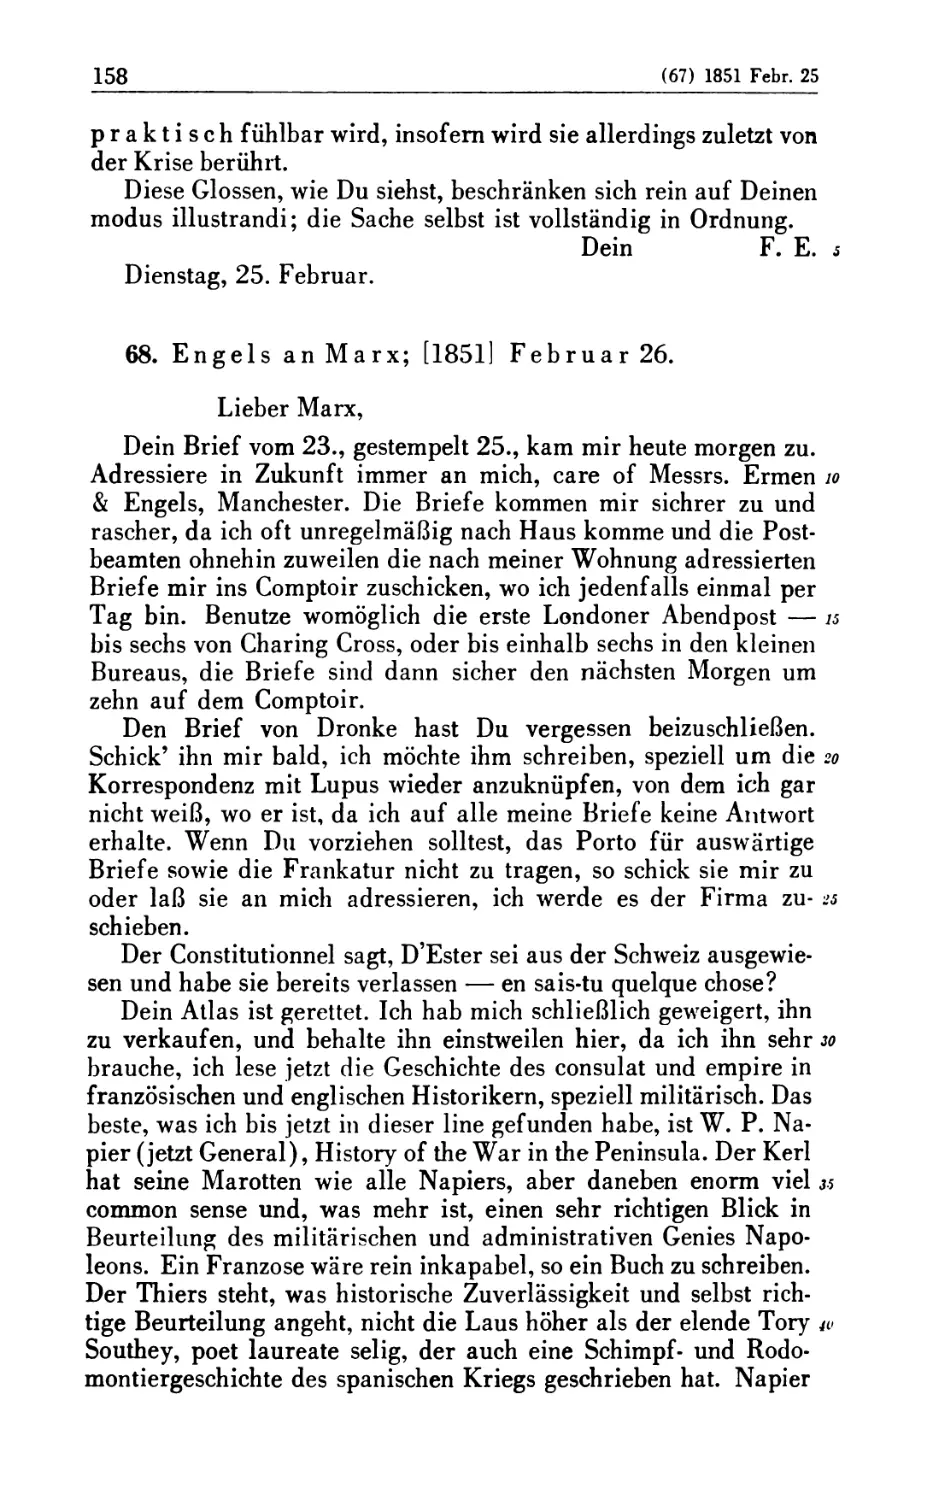 68. Engels an Marx; [1851] Februar 26